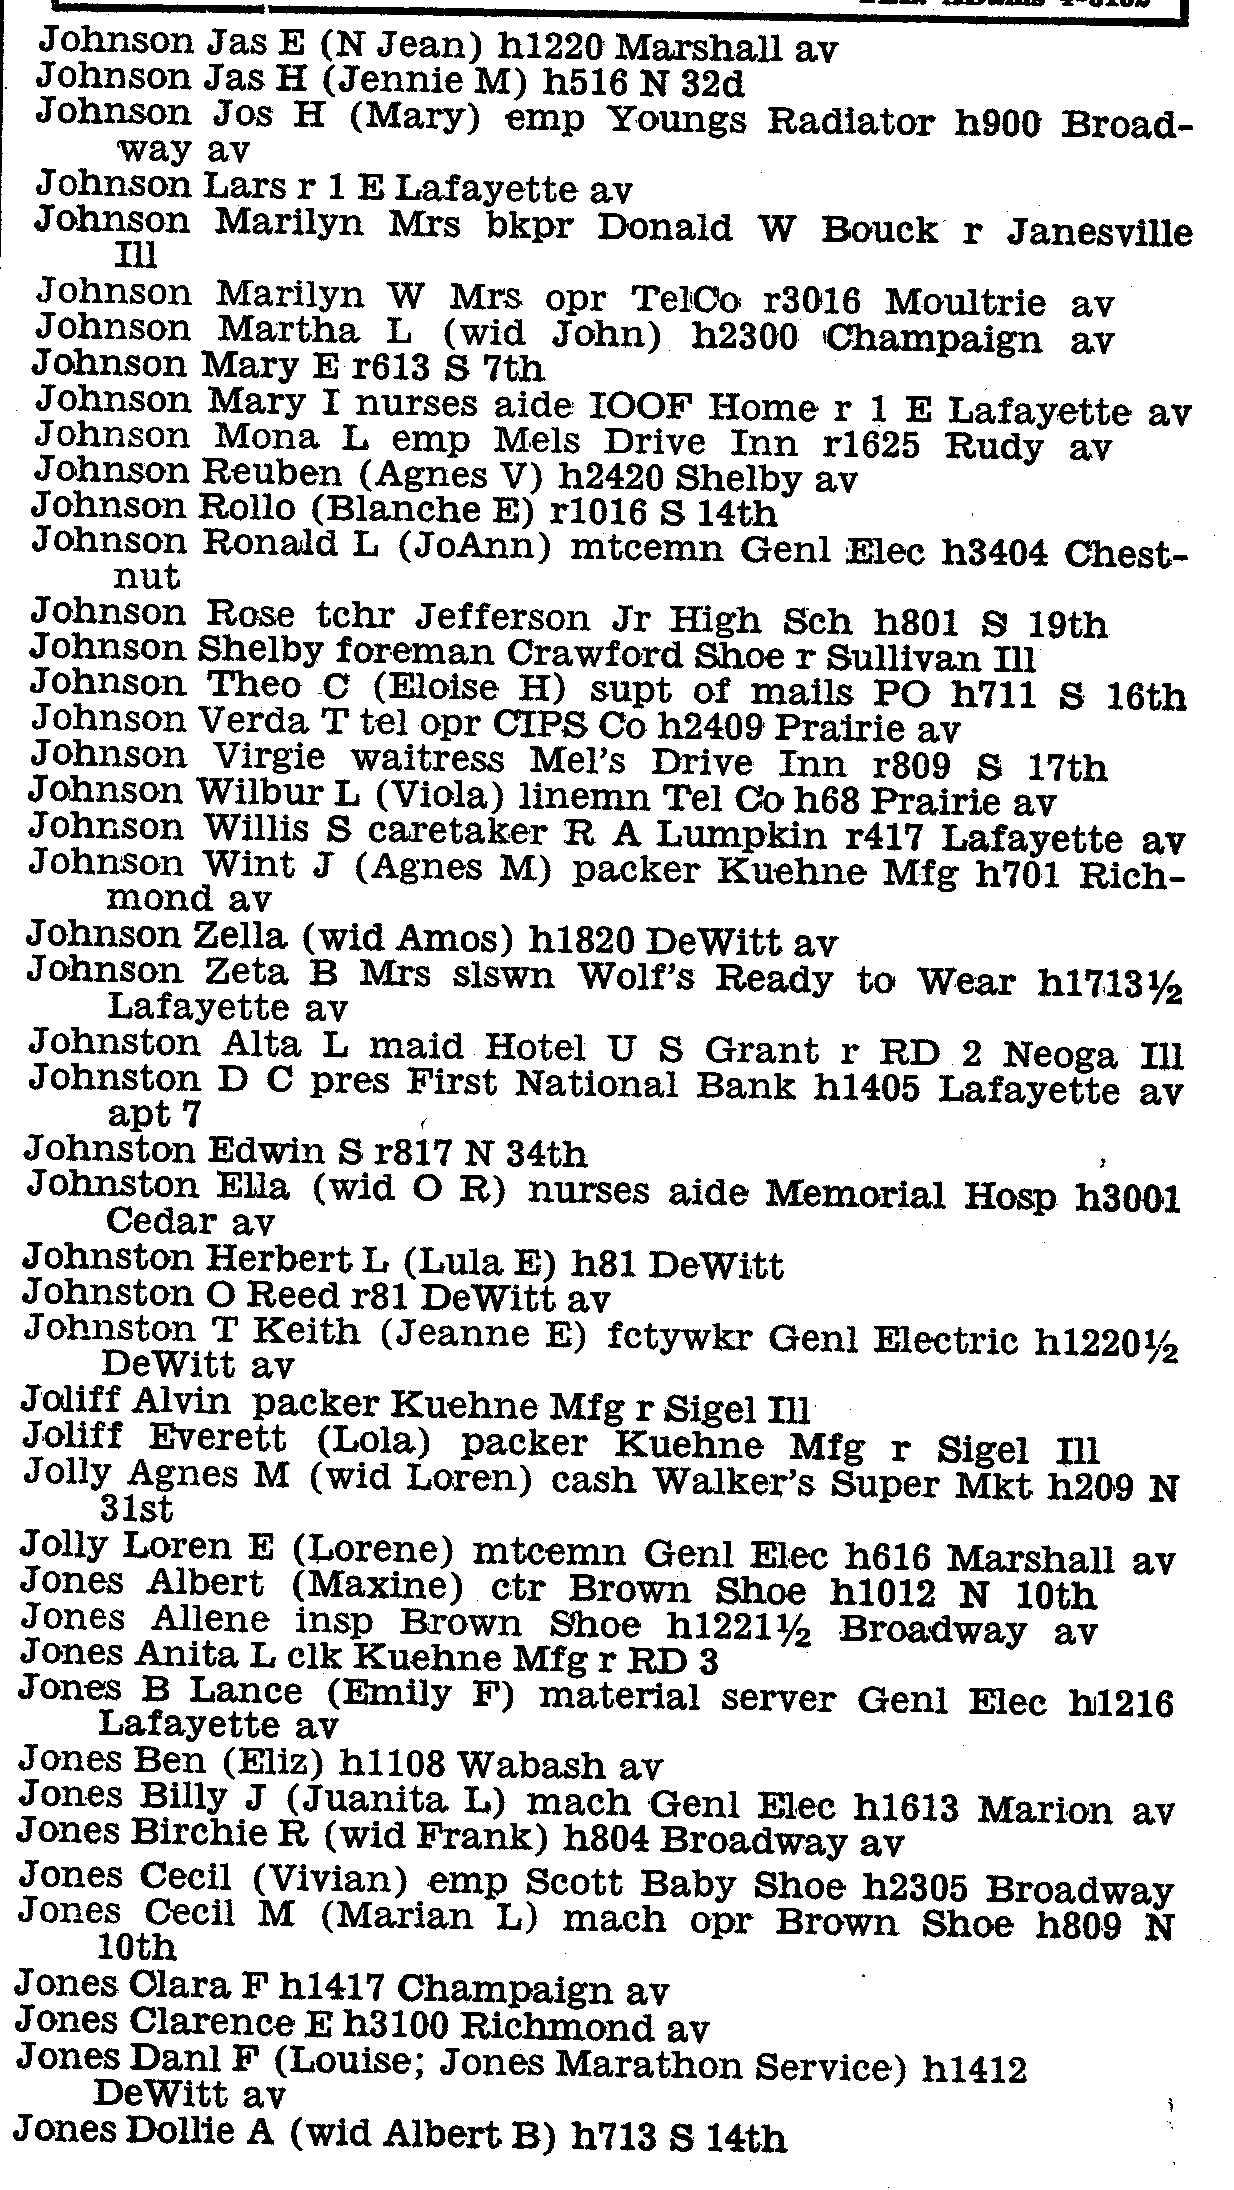 charleston directory 1960